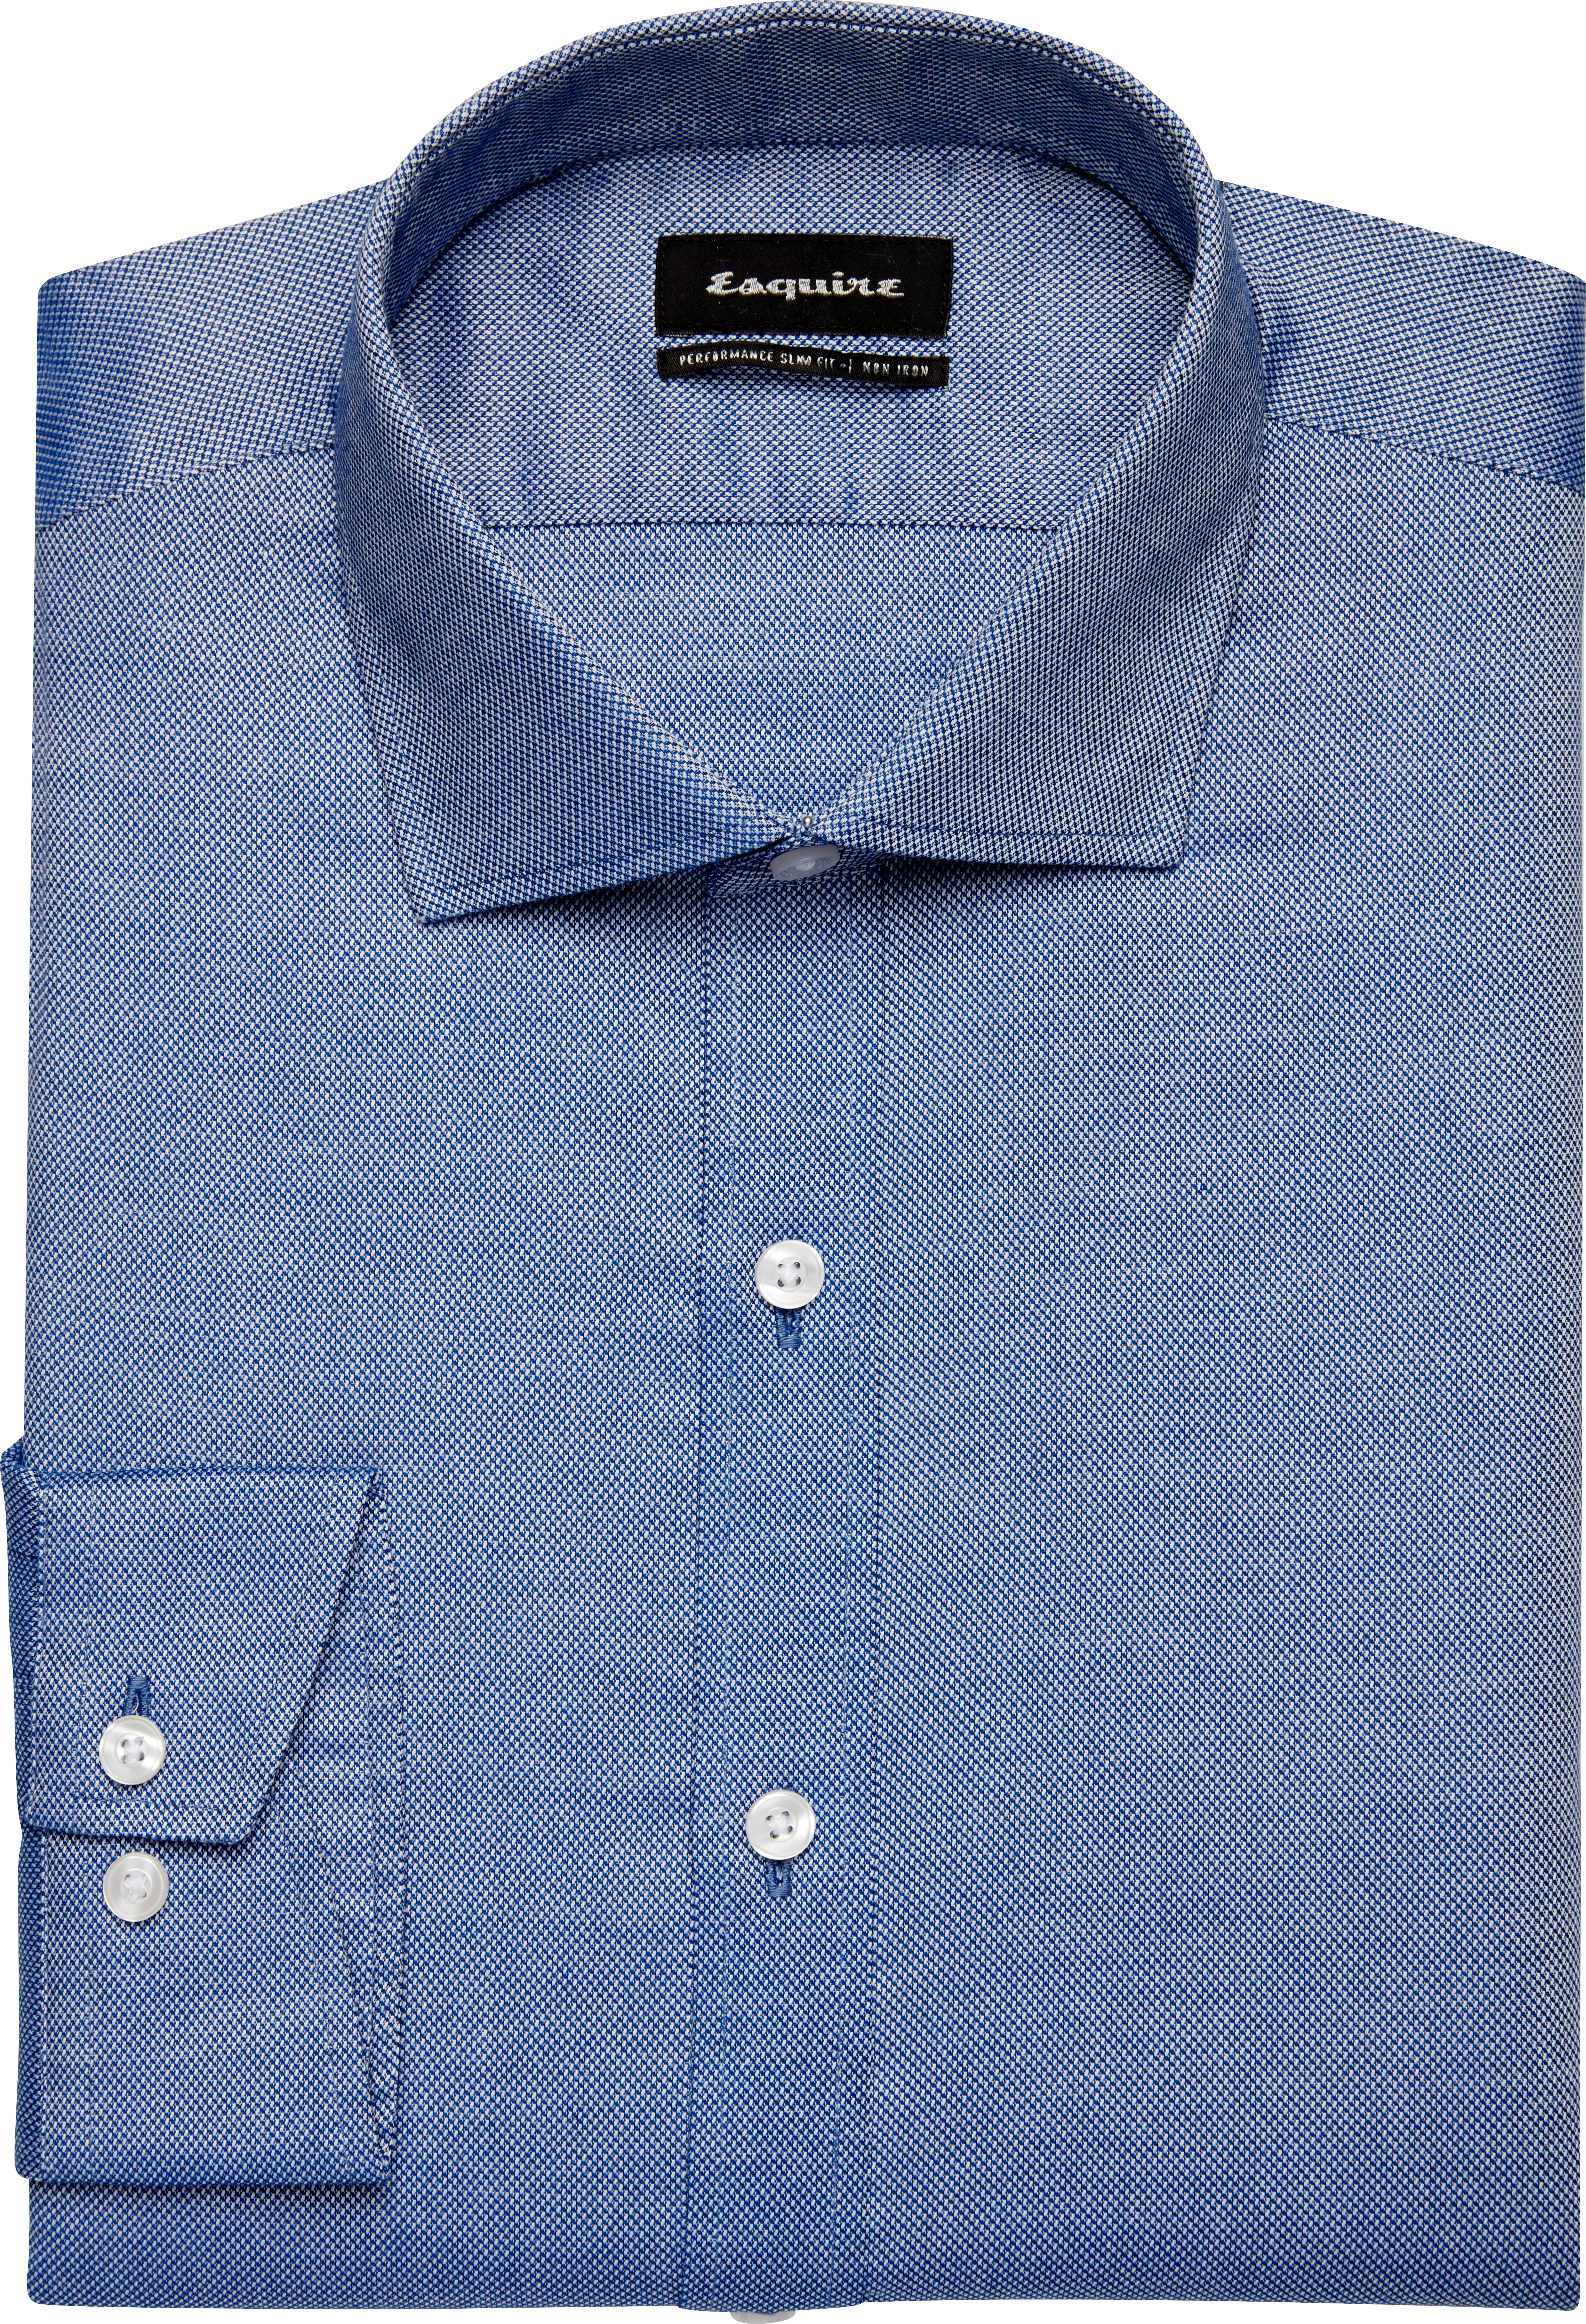 Esquire Navy Textured Slim Fit Dress Shirt - Men's Sale | Men's Wearhouse